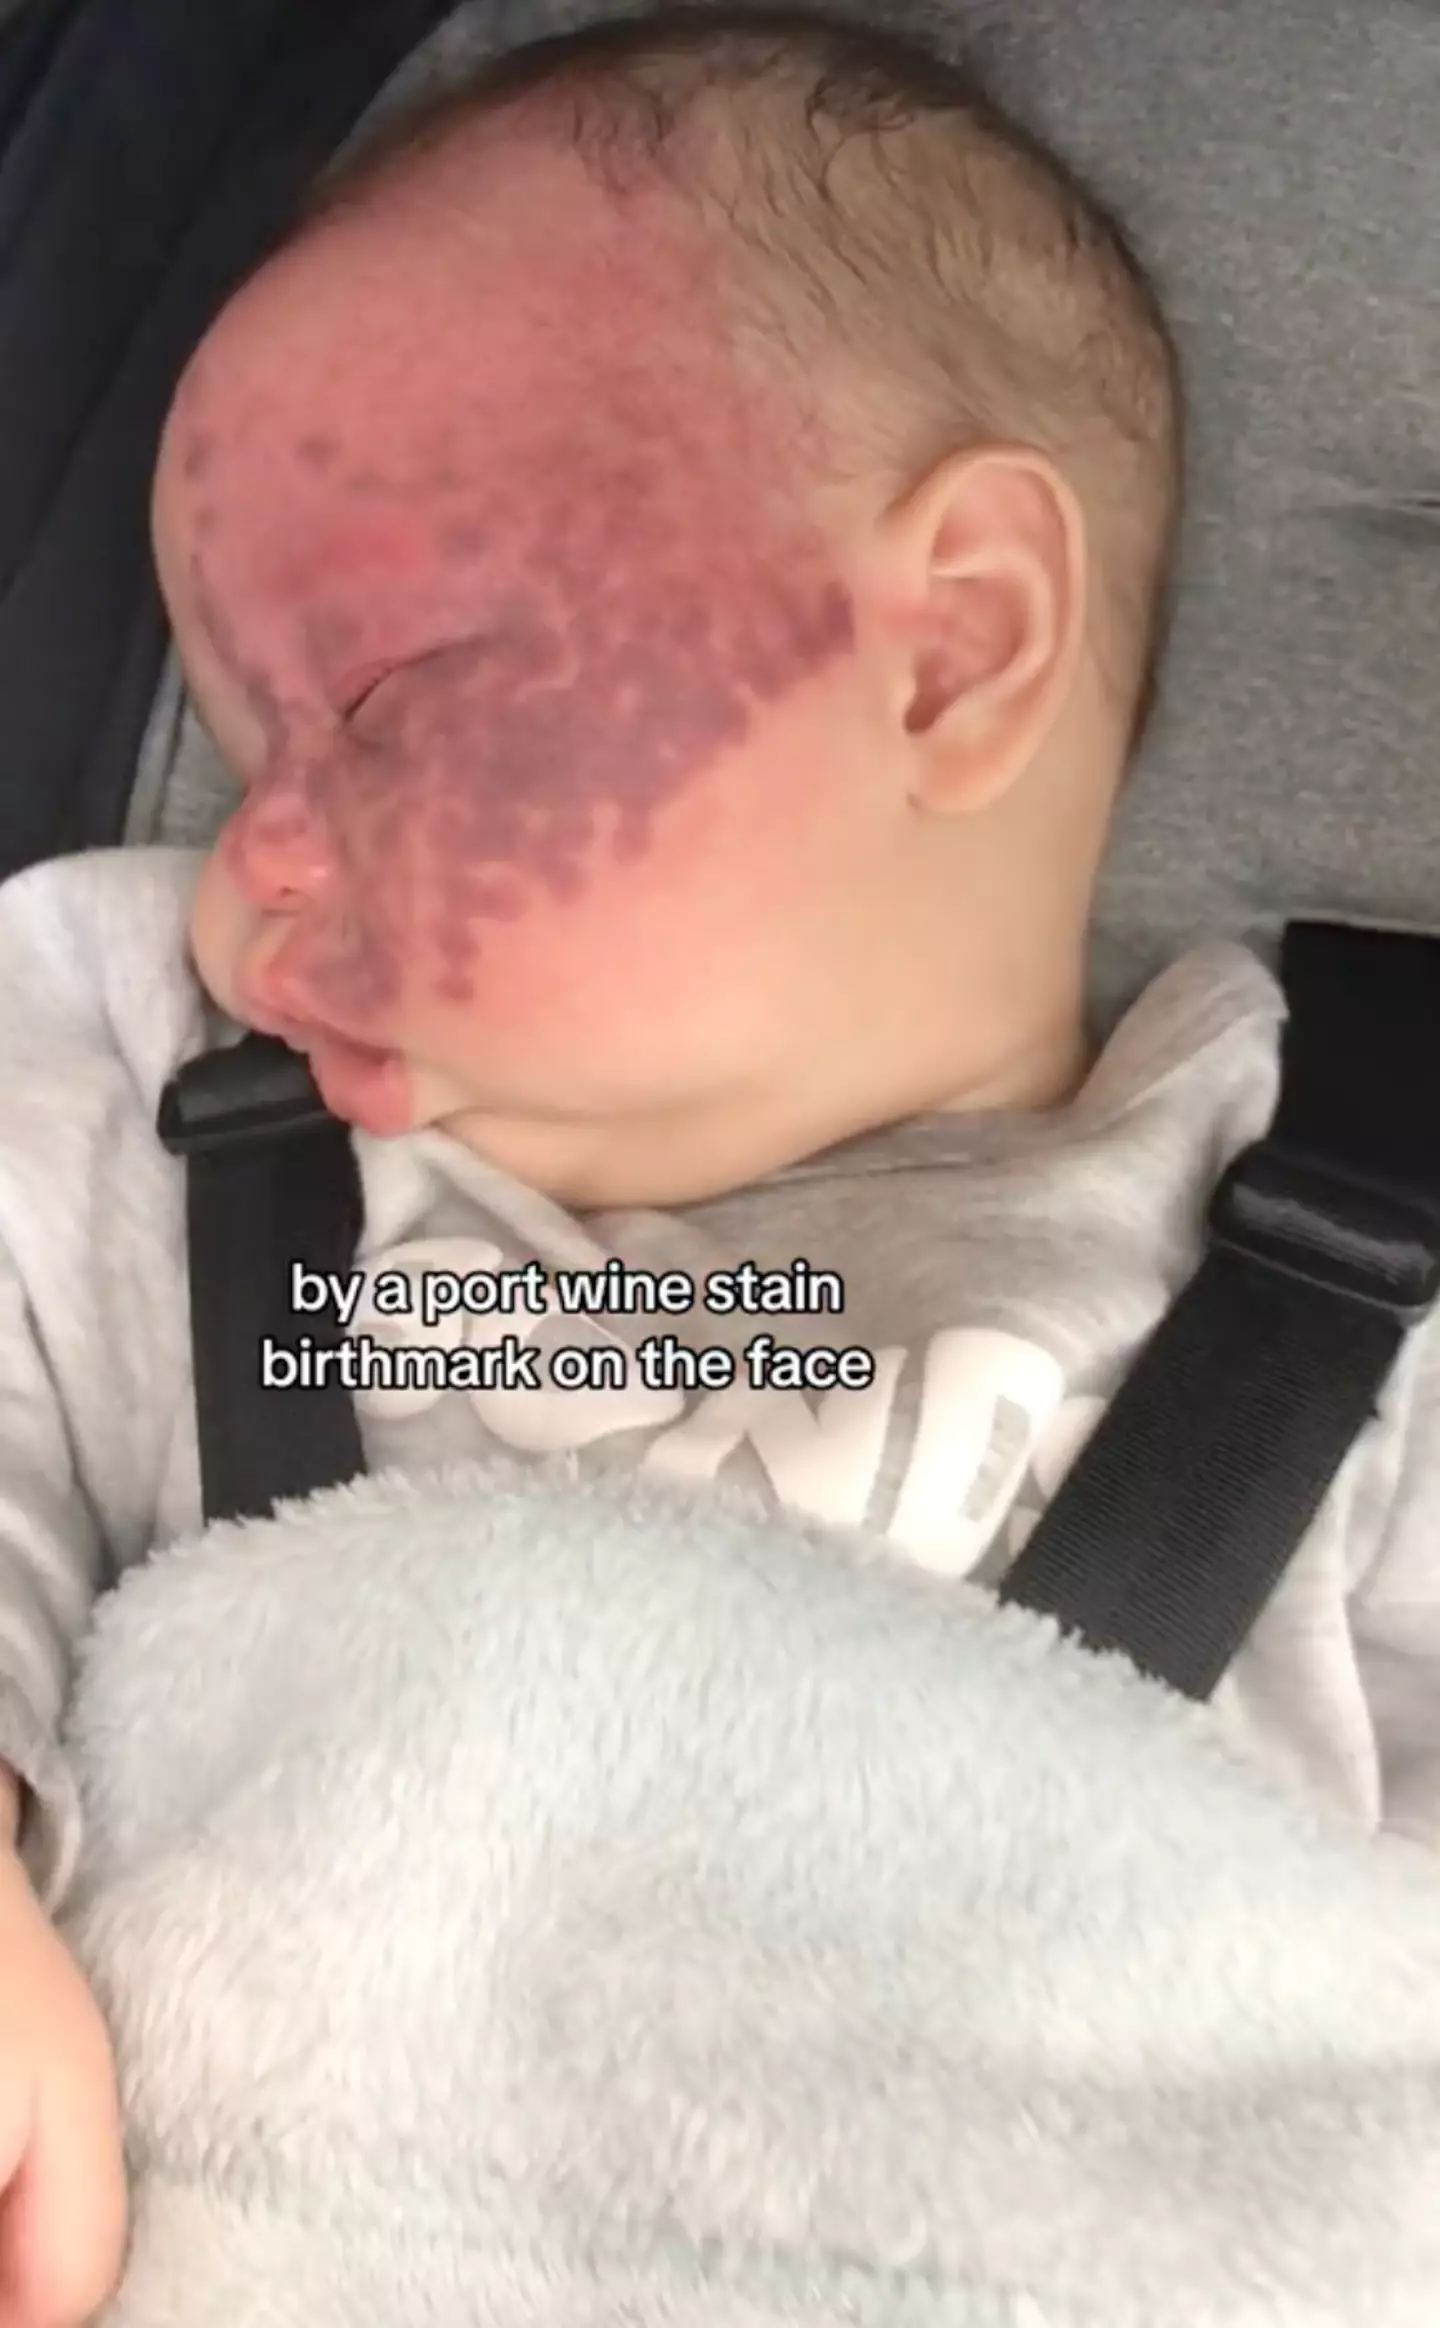 Baby Kingsley was born with a port-wine stain birthmark. (TikTok/@brookecyn)